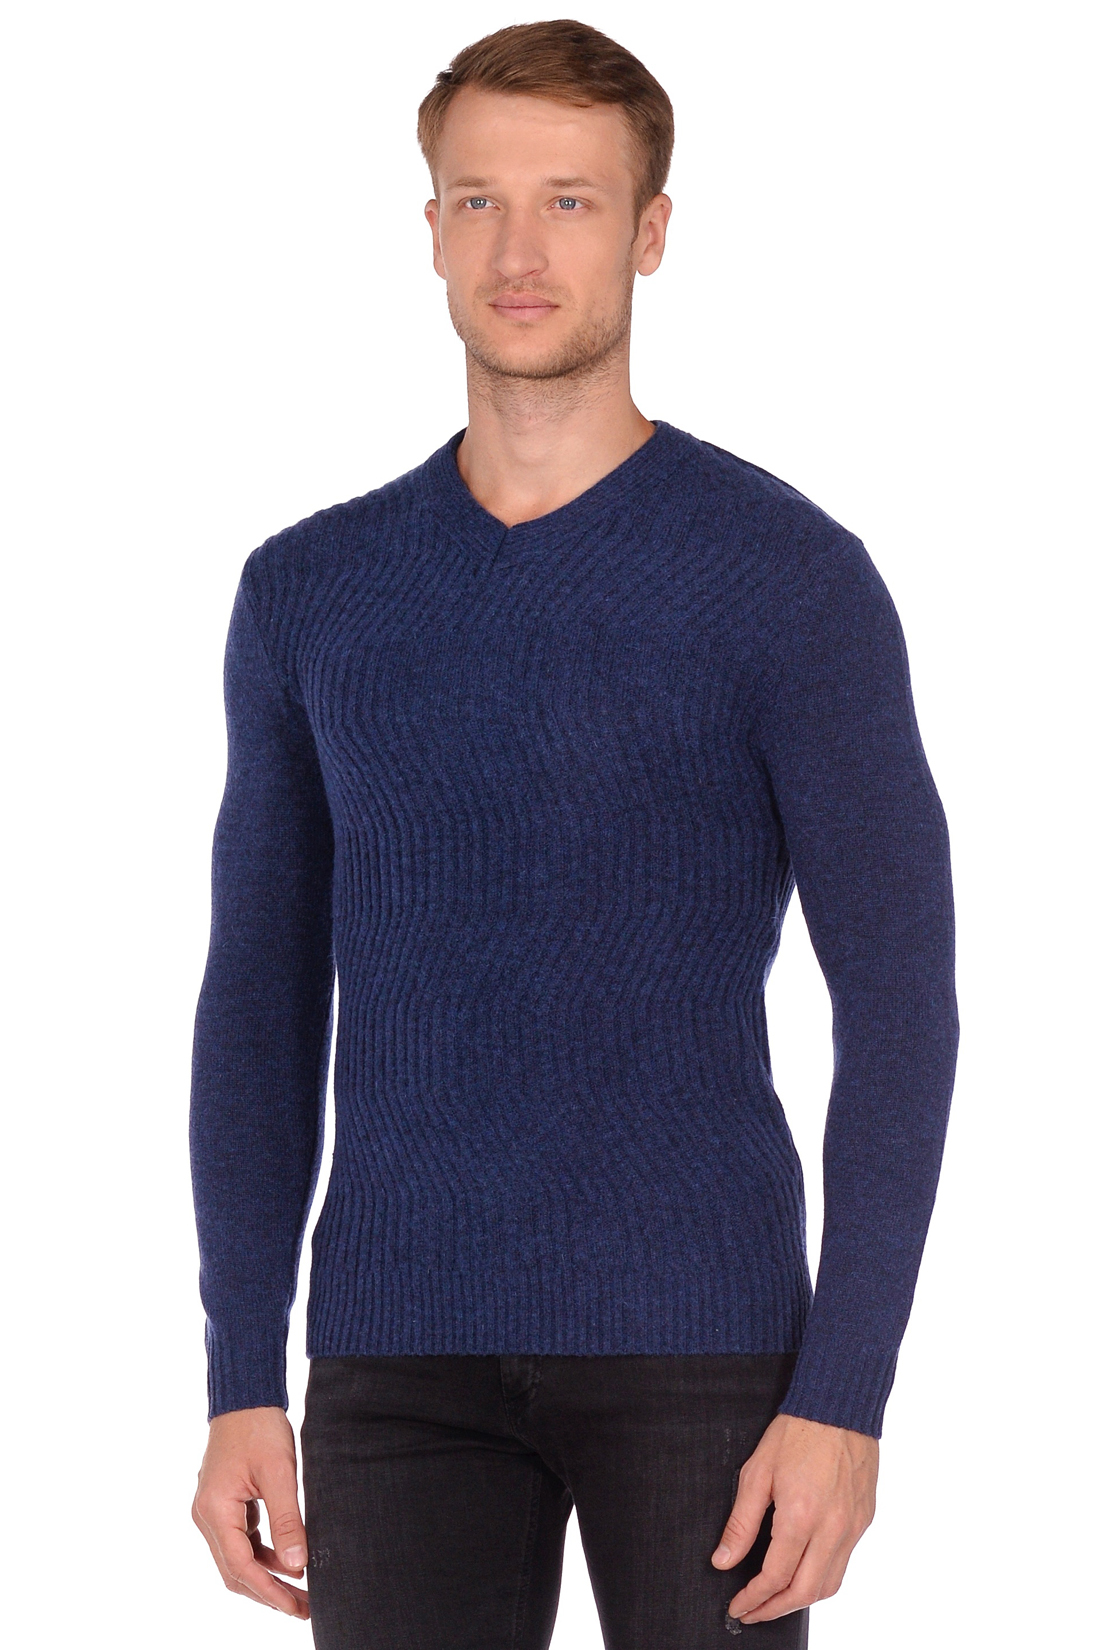 Пуловер с волнистым рисунком (арт. baon B638570), размер XXL, цвет baltic blue melange#синий Пуловер с волнистым рисунком (арт. baon B638570) - фото 1